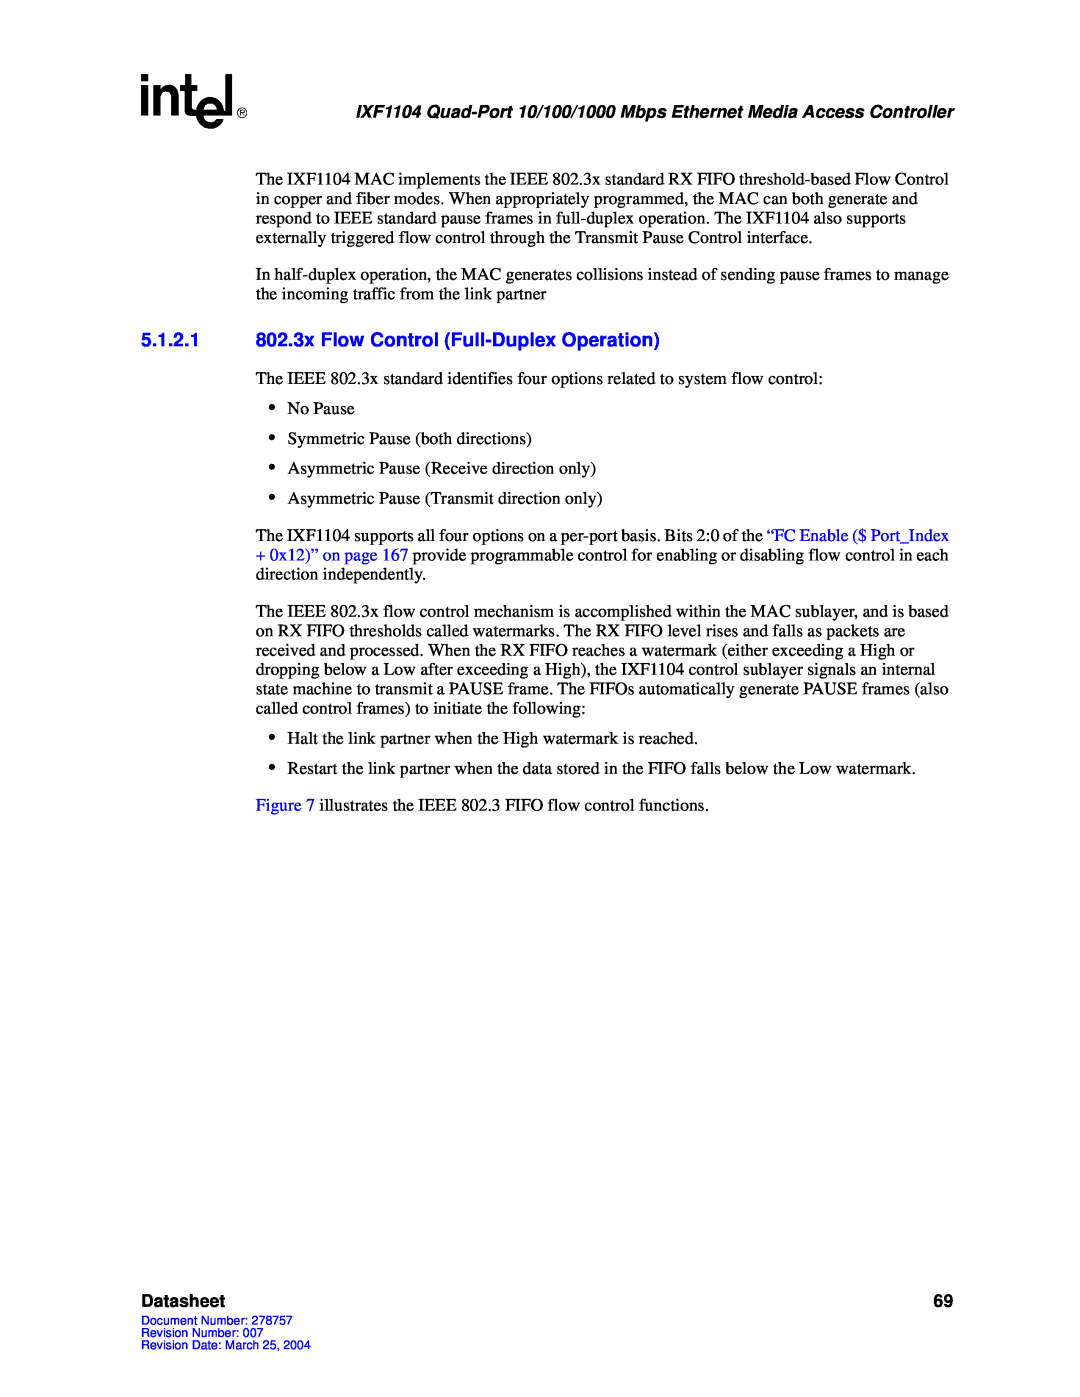 Intel IXF1104 manual 5.1.2.1802.3x Flow Control Full-DuplexOperation, Datasheet 